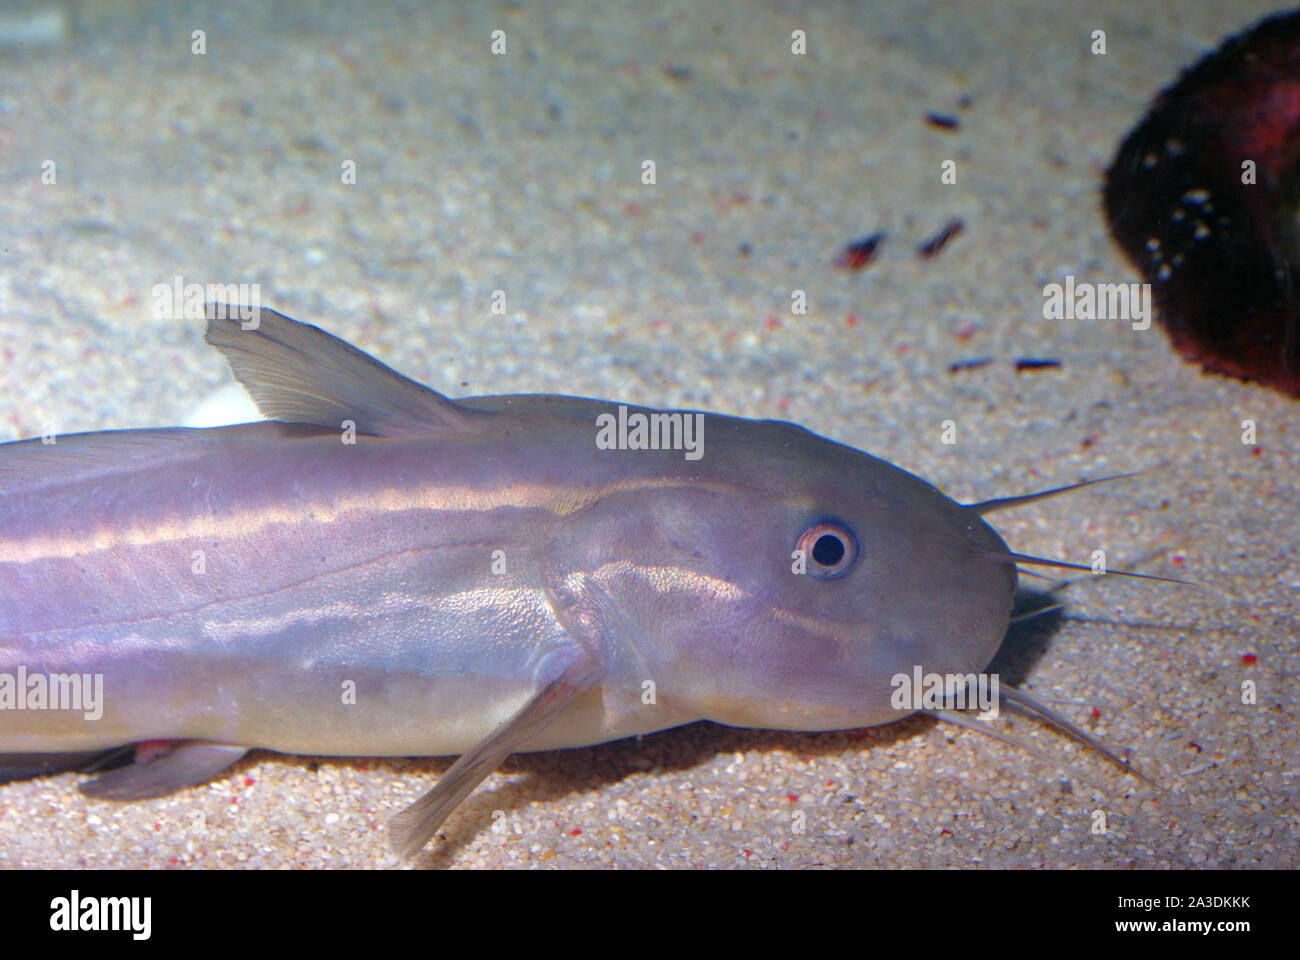 Adult Striped eel catfish, Plotosus lineatus Stock Photo